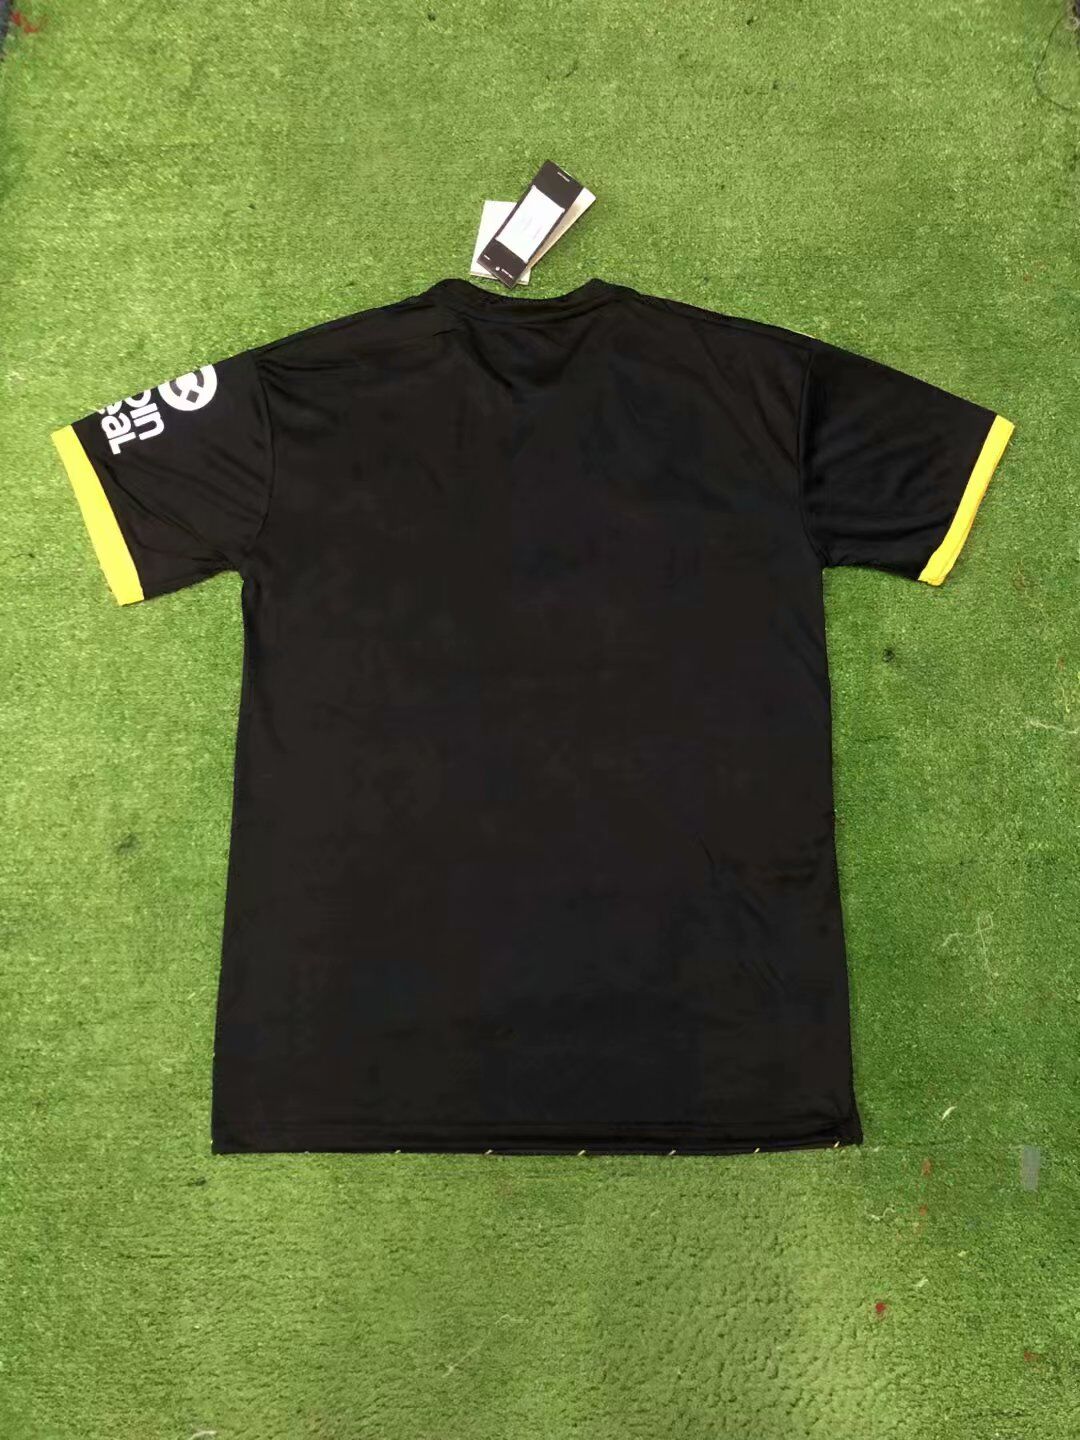 2019-20 Wolverhampton Wanderers Away Black Soccer Jerseys Shirt - Click Image to Close